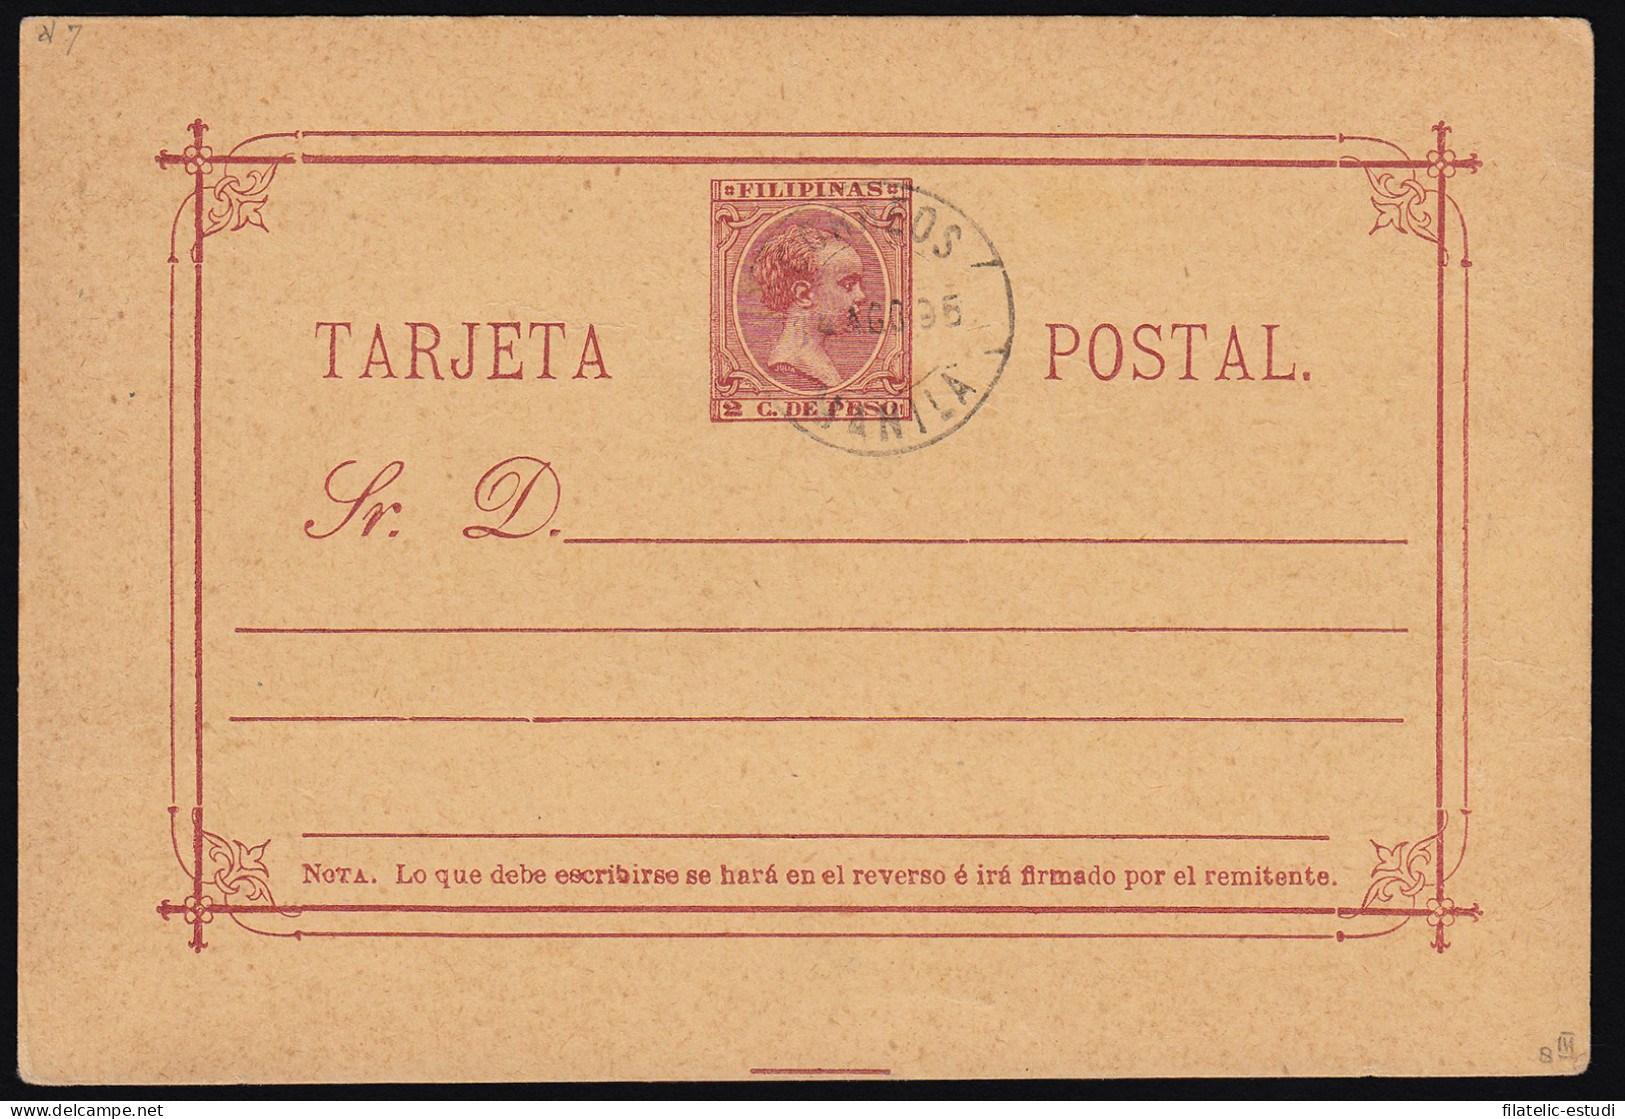 Filipinas Philippines Entero Postal 8 1894 AlfonsoXIII - Philippines